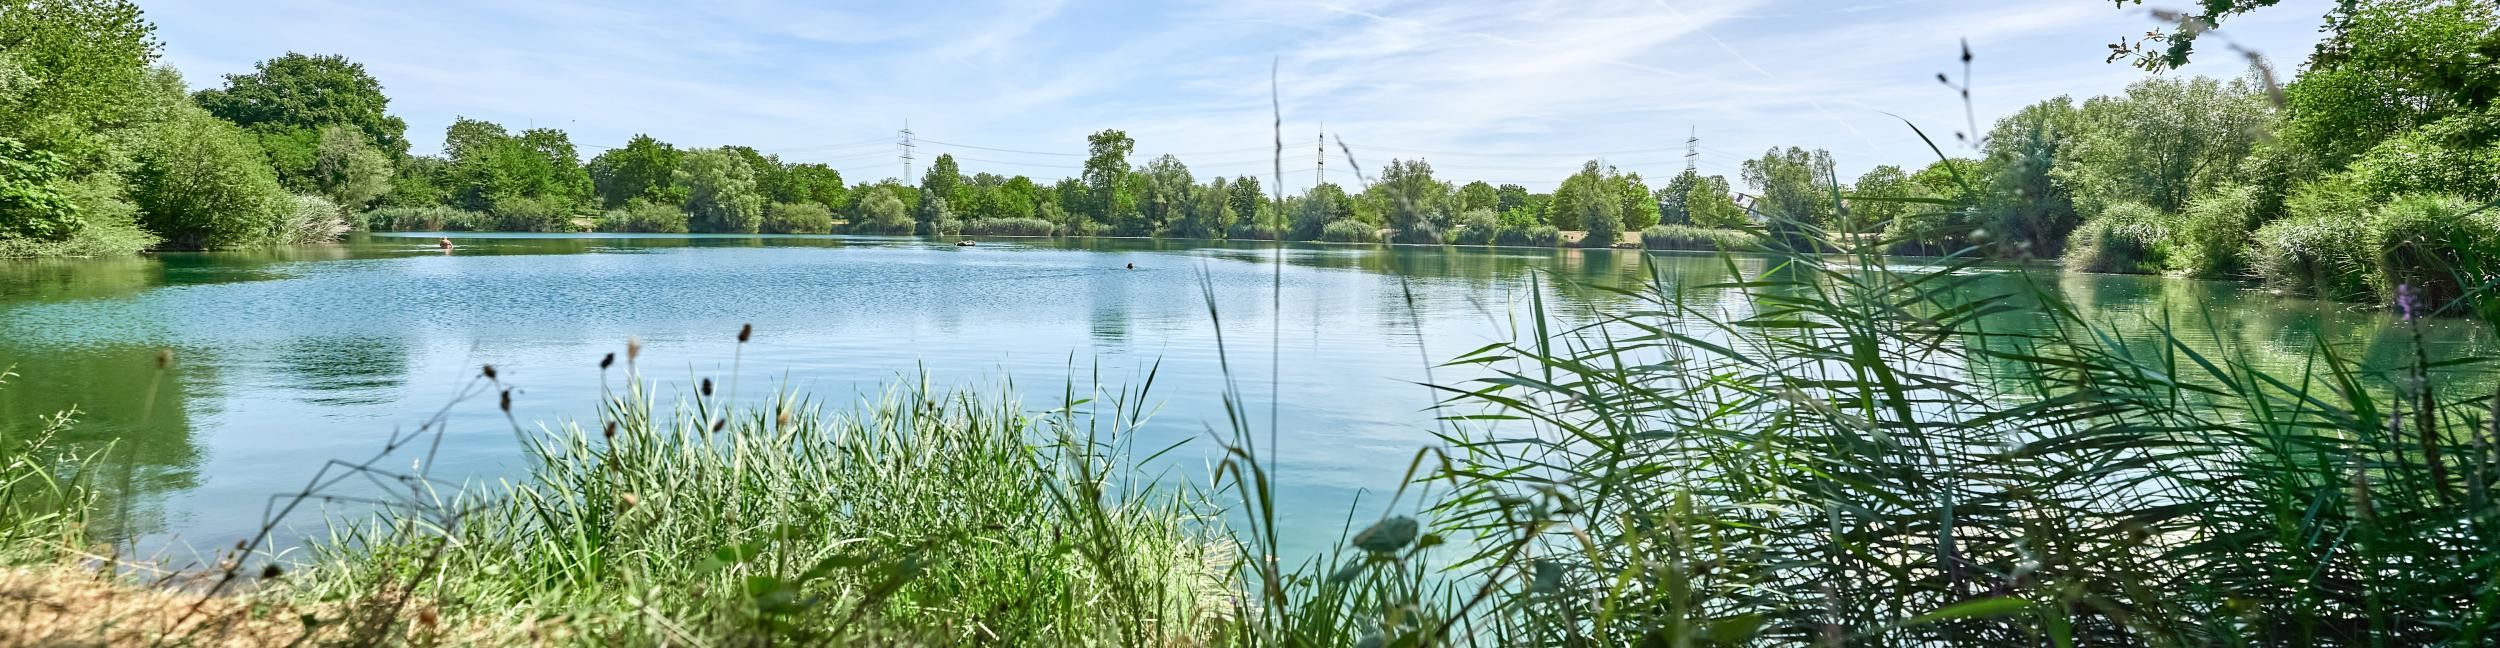 Rive du lac Lindensee à Ottersdorf